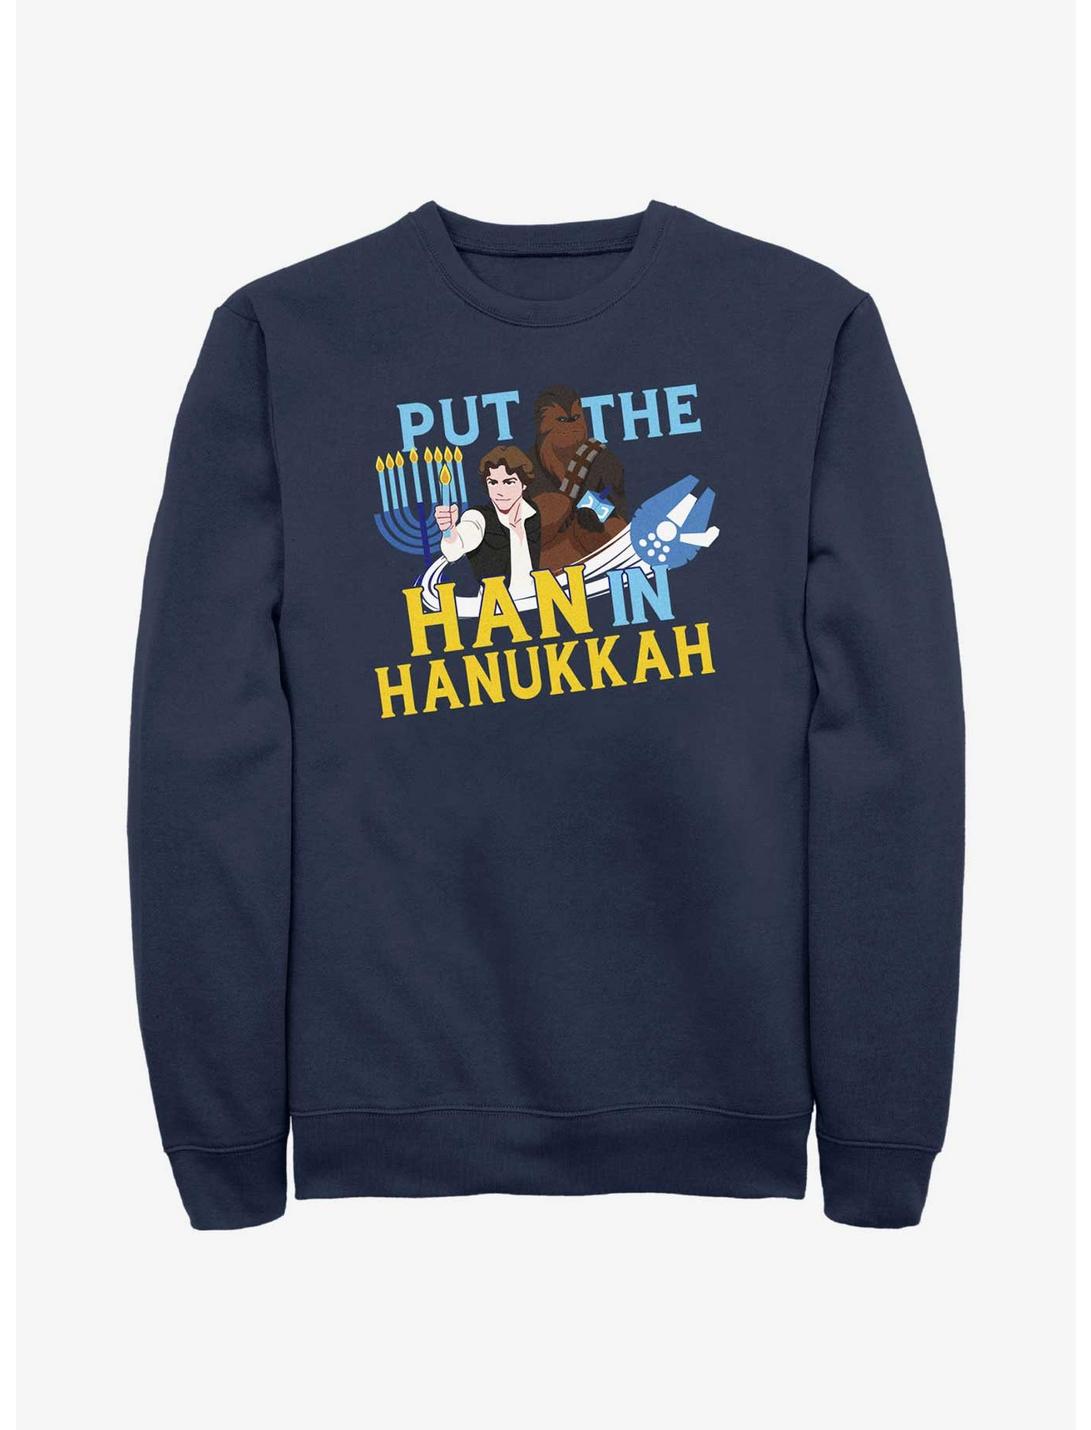 Star Wars Han Solo Han In Hanukkah Sweatshirt, NAVY, hi-res